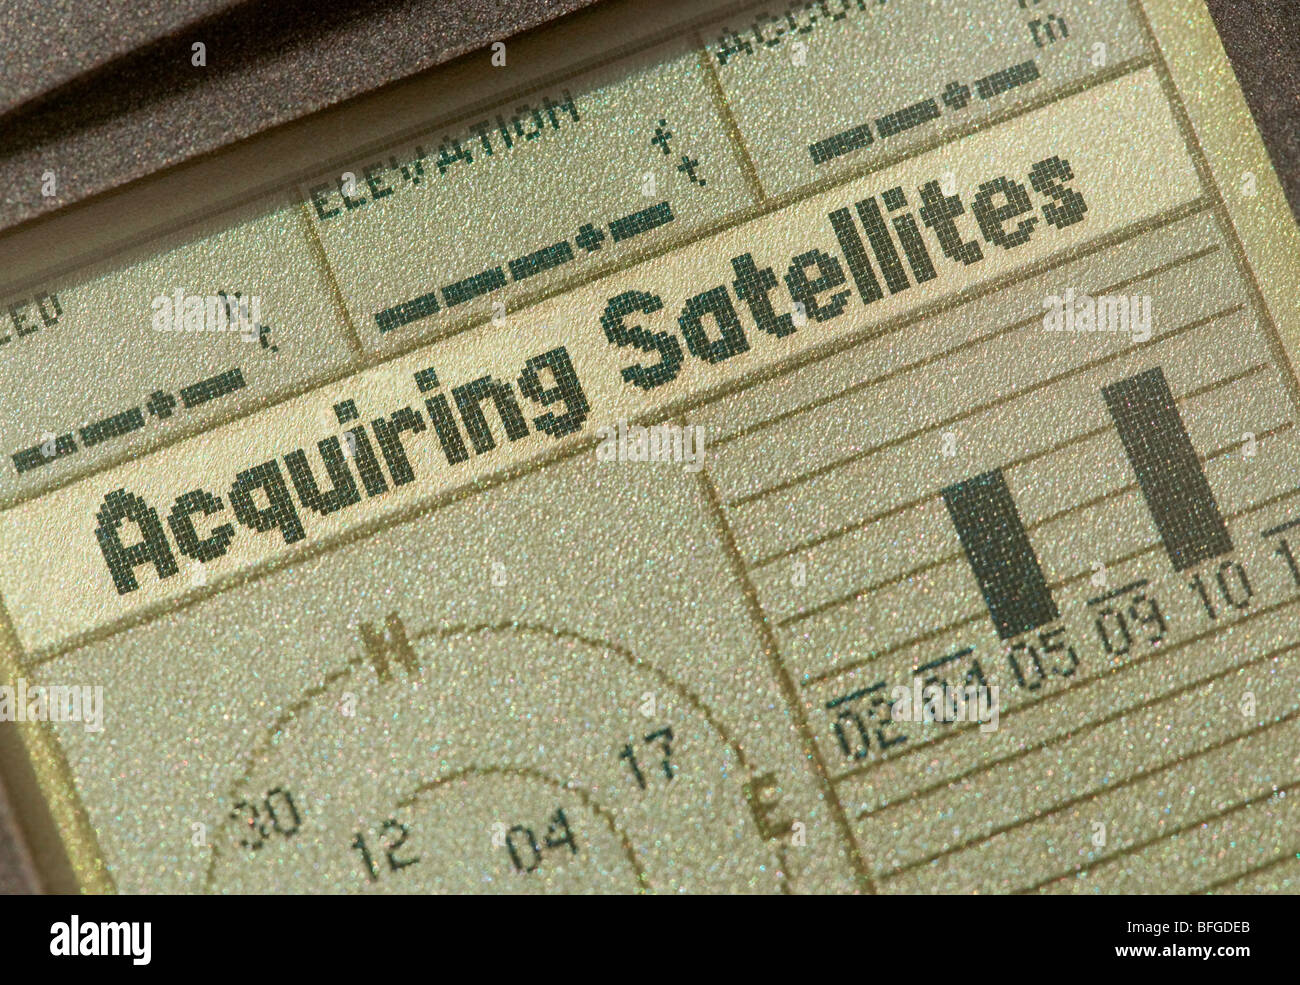 'Acquiring Satellites' screen on a handheld GPS Stock Photo